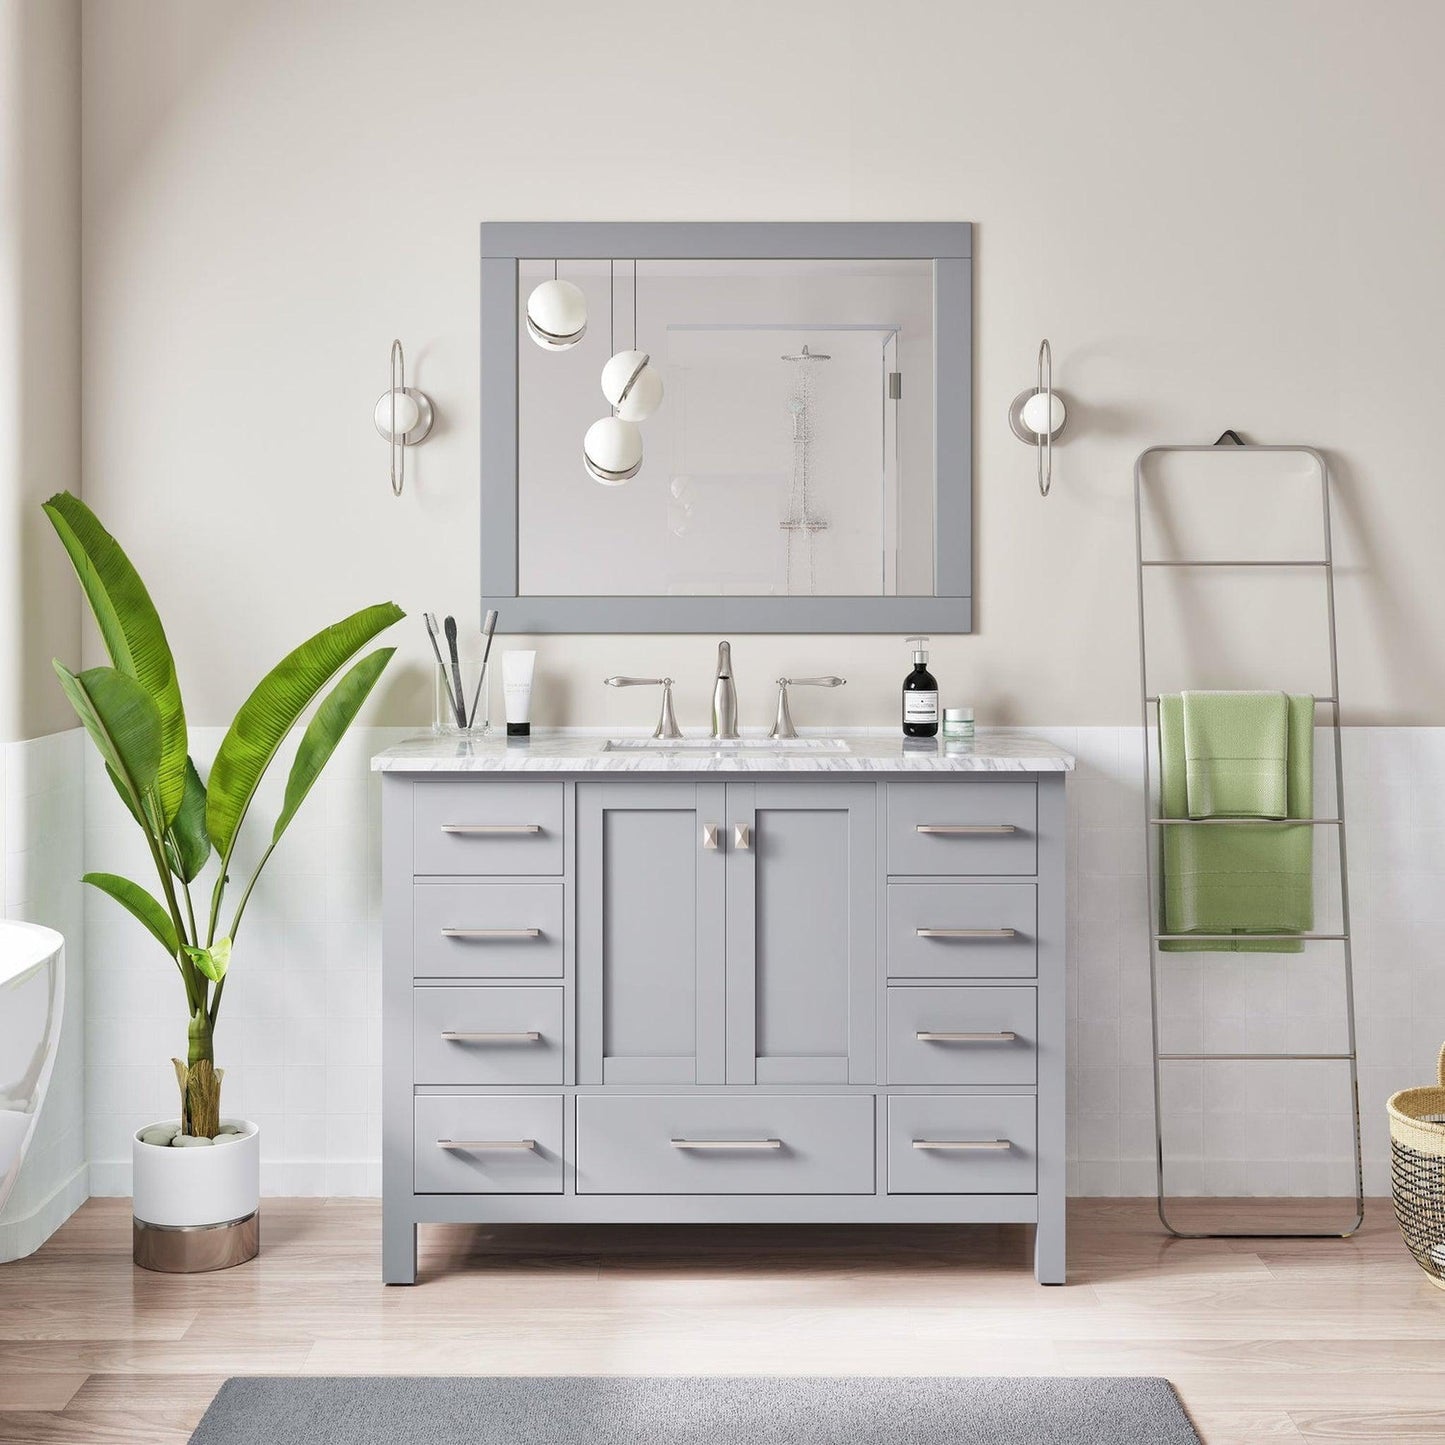 Eviva Aberdeen 42" x 34" Gray Freestanding Bathroom Vanity With Single Undermount Sink